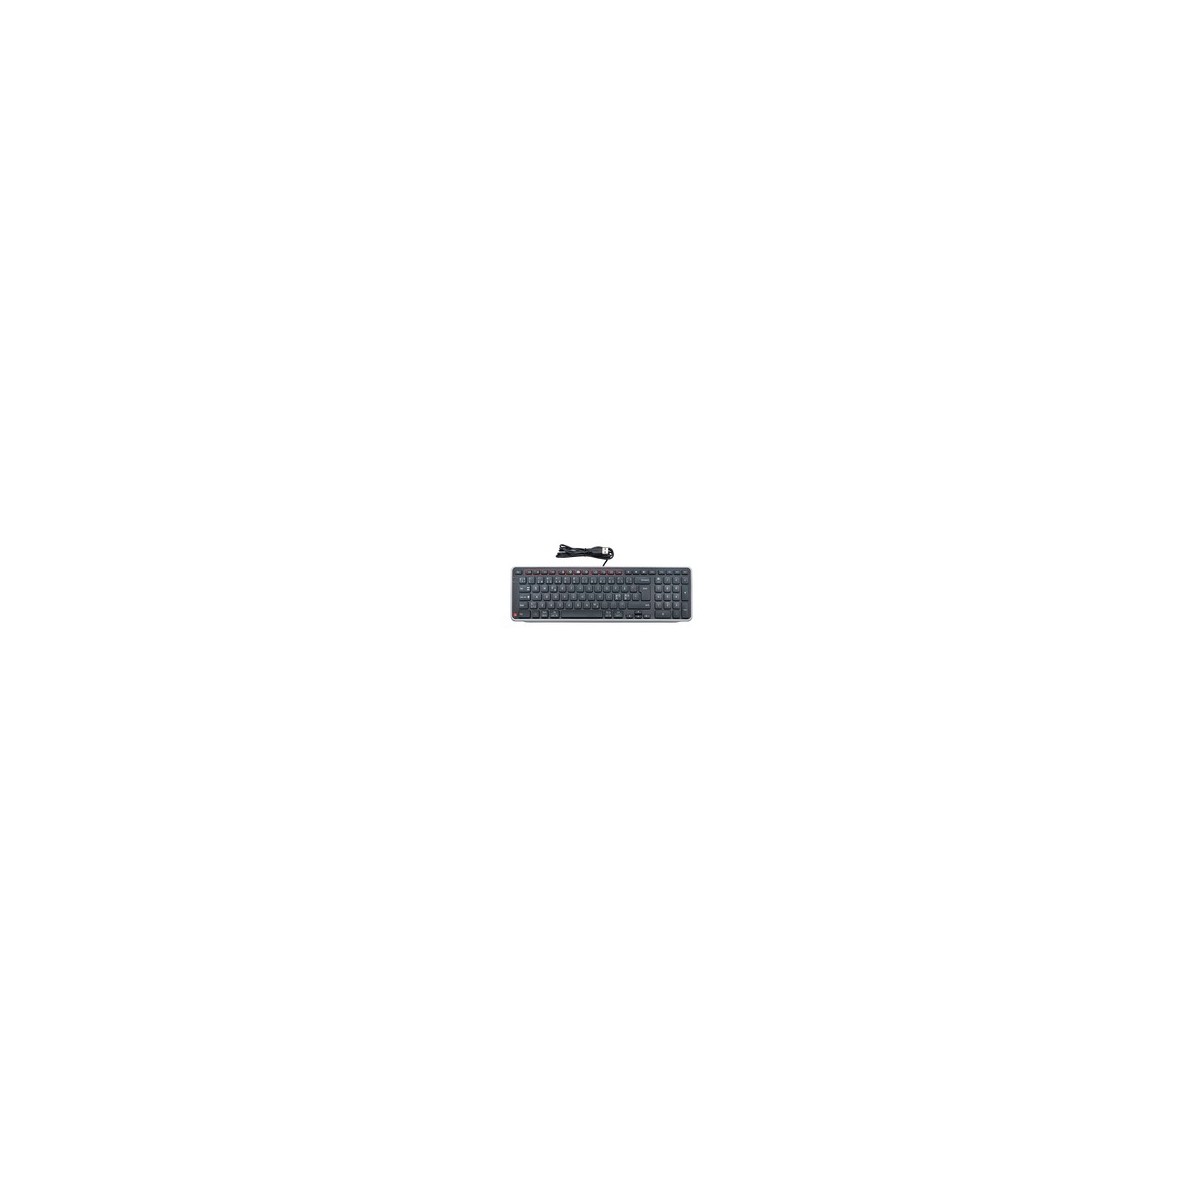 Contour Design Balance - Full-size (100%) - USB - QWERTY - Black